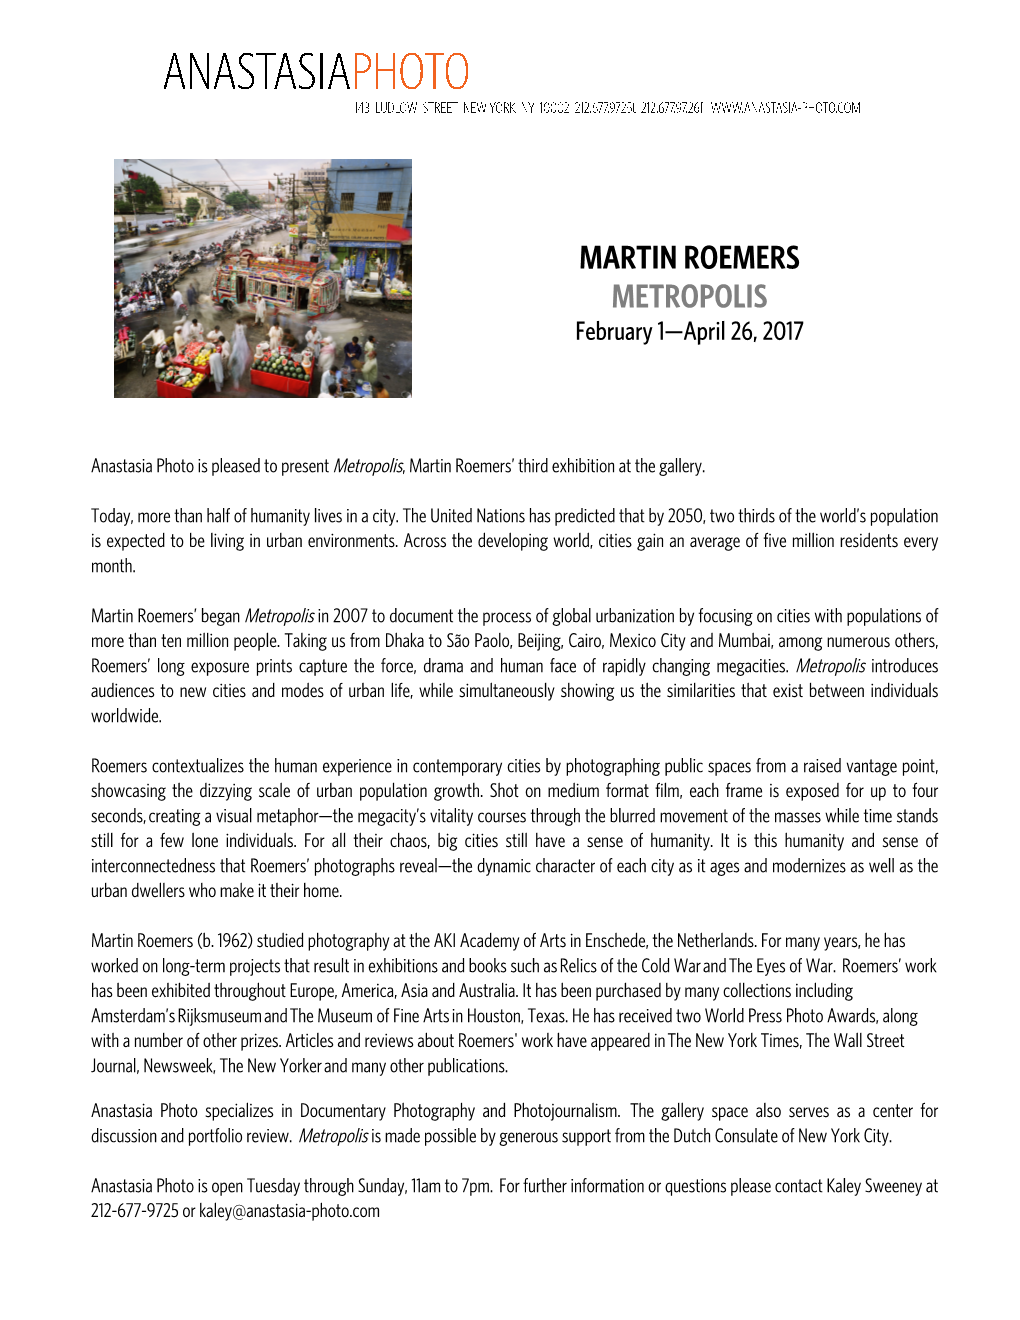 MARTIN ROEMERS METROPOLIS February 1—April 26, 2017